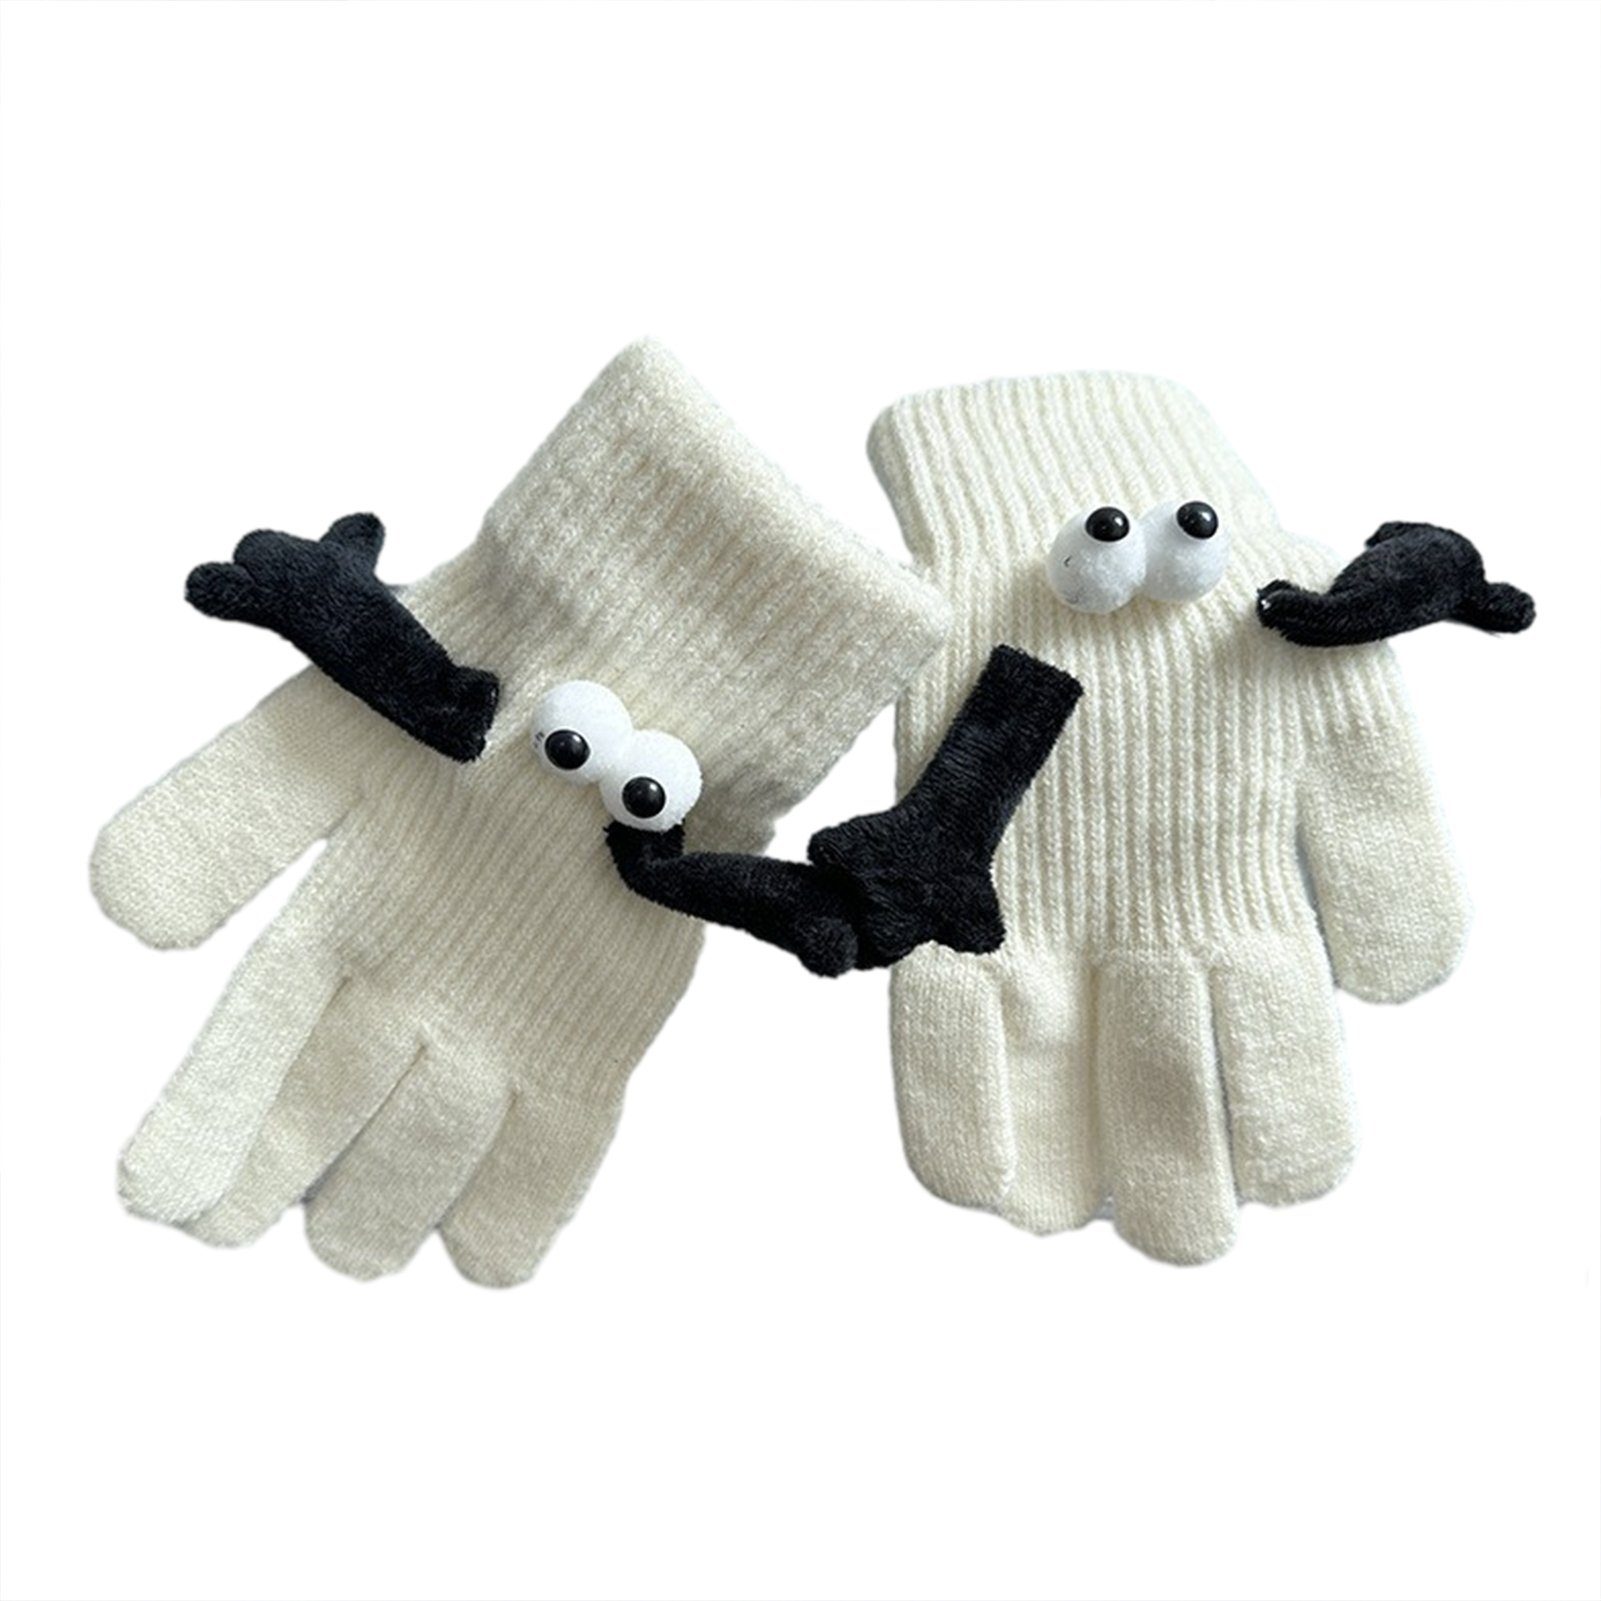 Blusmart Strickhandschuhe Warme Strickhandschuhe Mit Cartoon-Hand-in-Hand-Motiv, Bequem, Handschuhe beige M